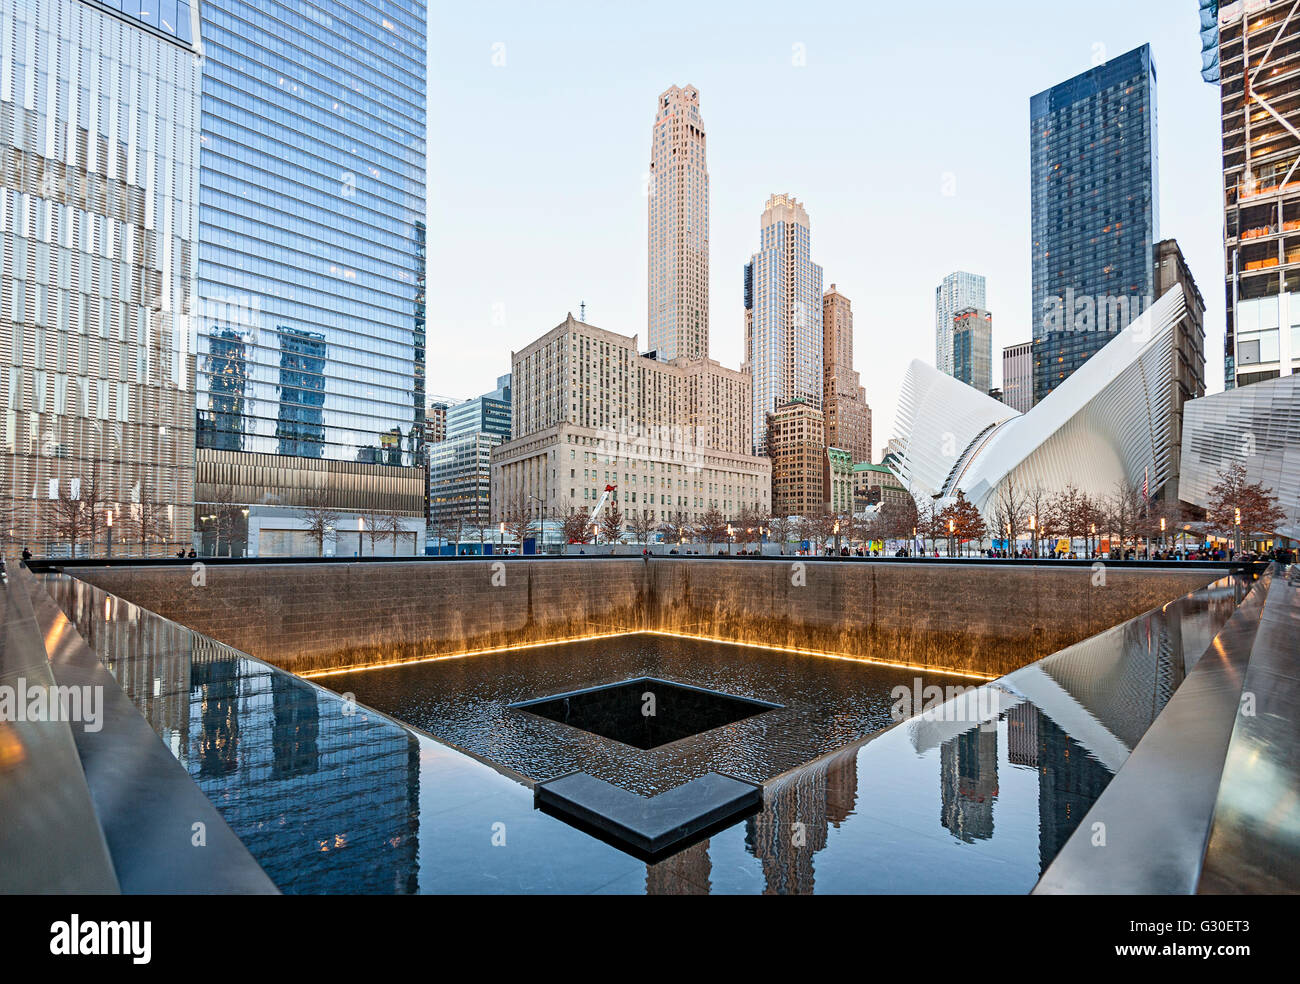 Oculus Santiago Calatrava 9/11 Memorial Plaza Manhattan New York City Reflecting Pool Banque D'Images